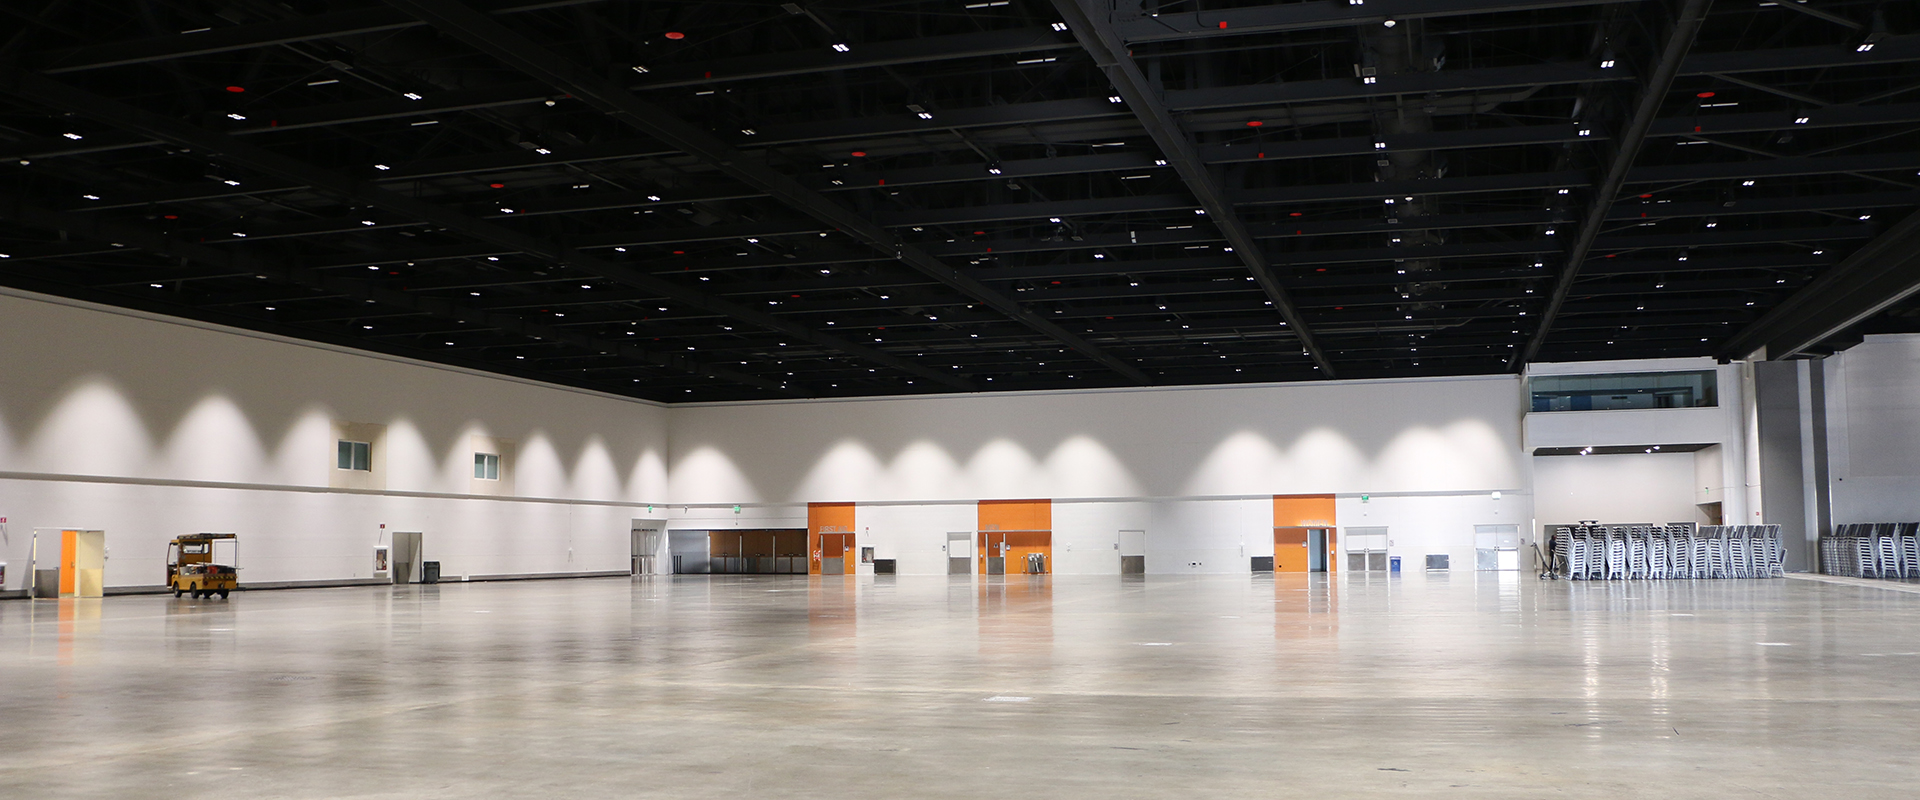 San Jose McEnery Convention Center in San Jose, CA